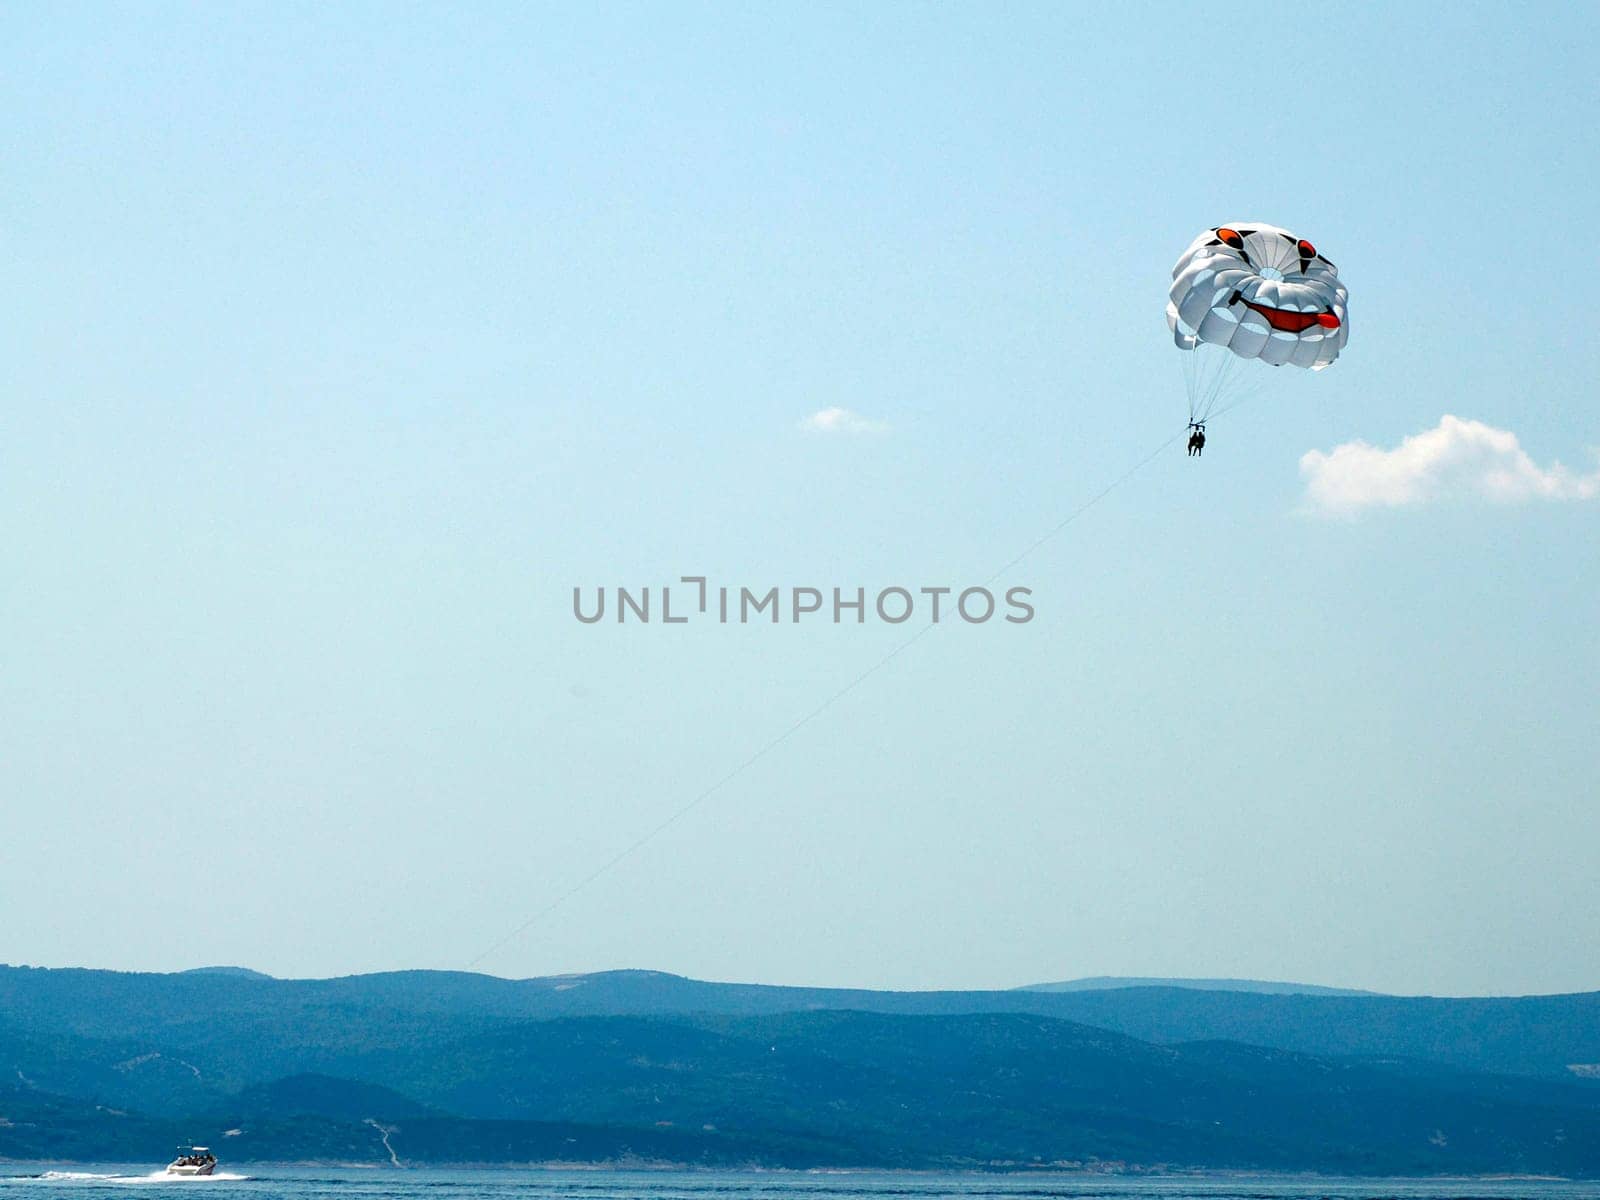 parachuting with speedboat over the crystal clear water of Adriatic sea in Brela on Makarska Riviera, Dalmatia Croatia